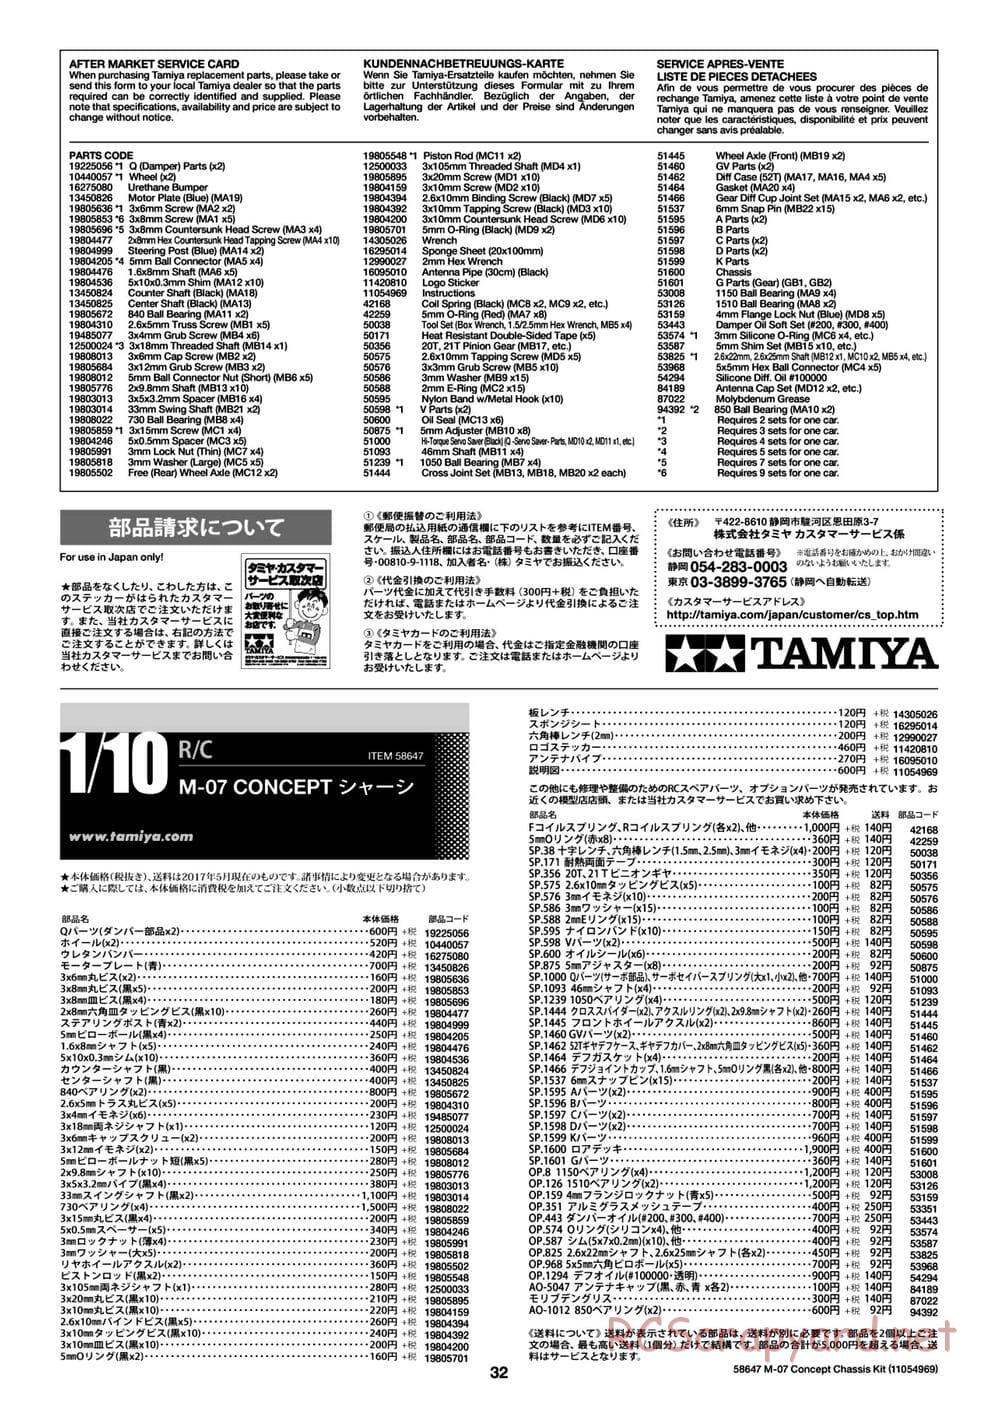 Tamiya - M-07 Concept Chassis - Manual - Page 32